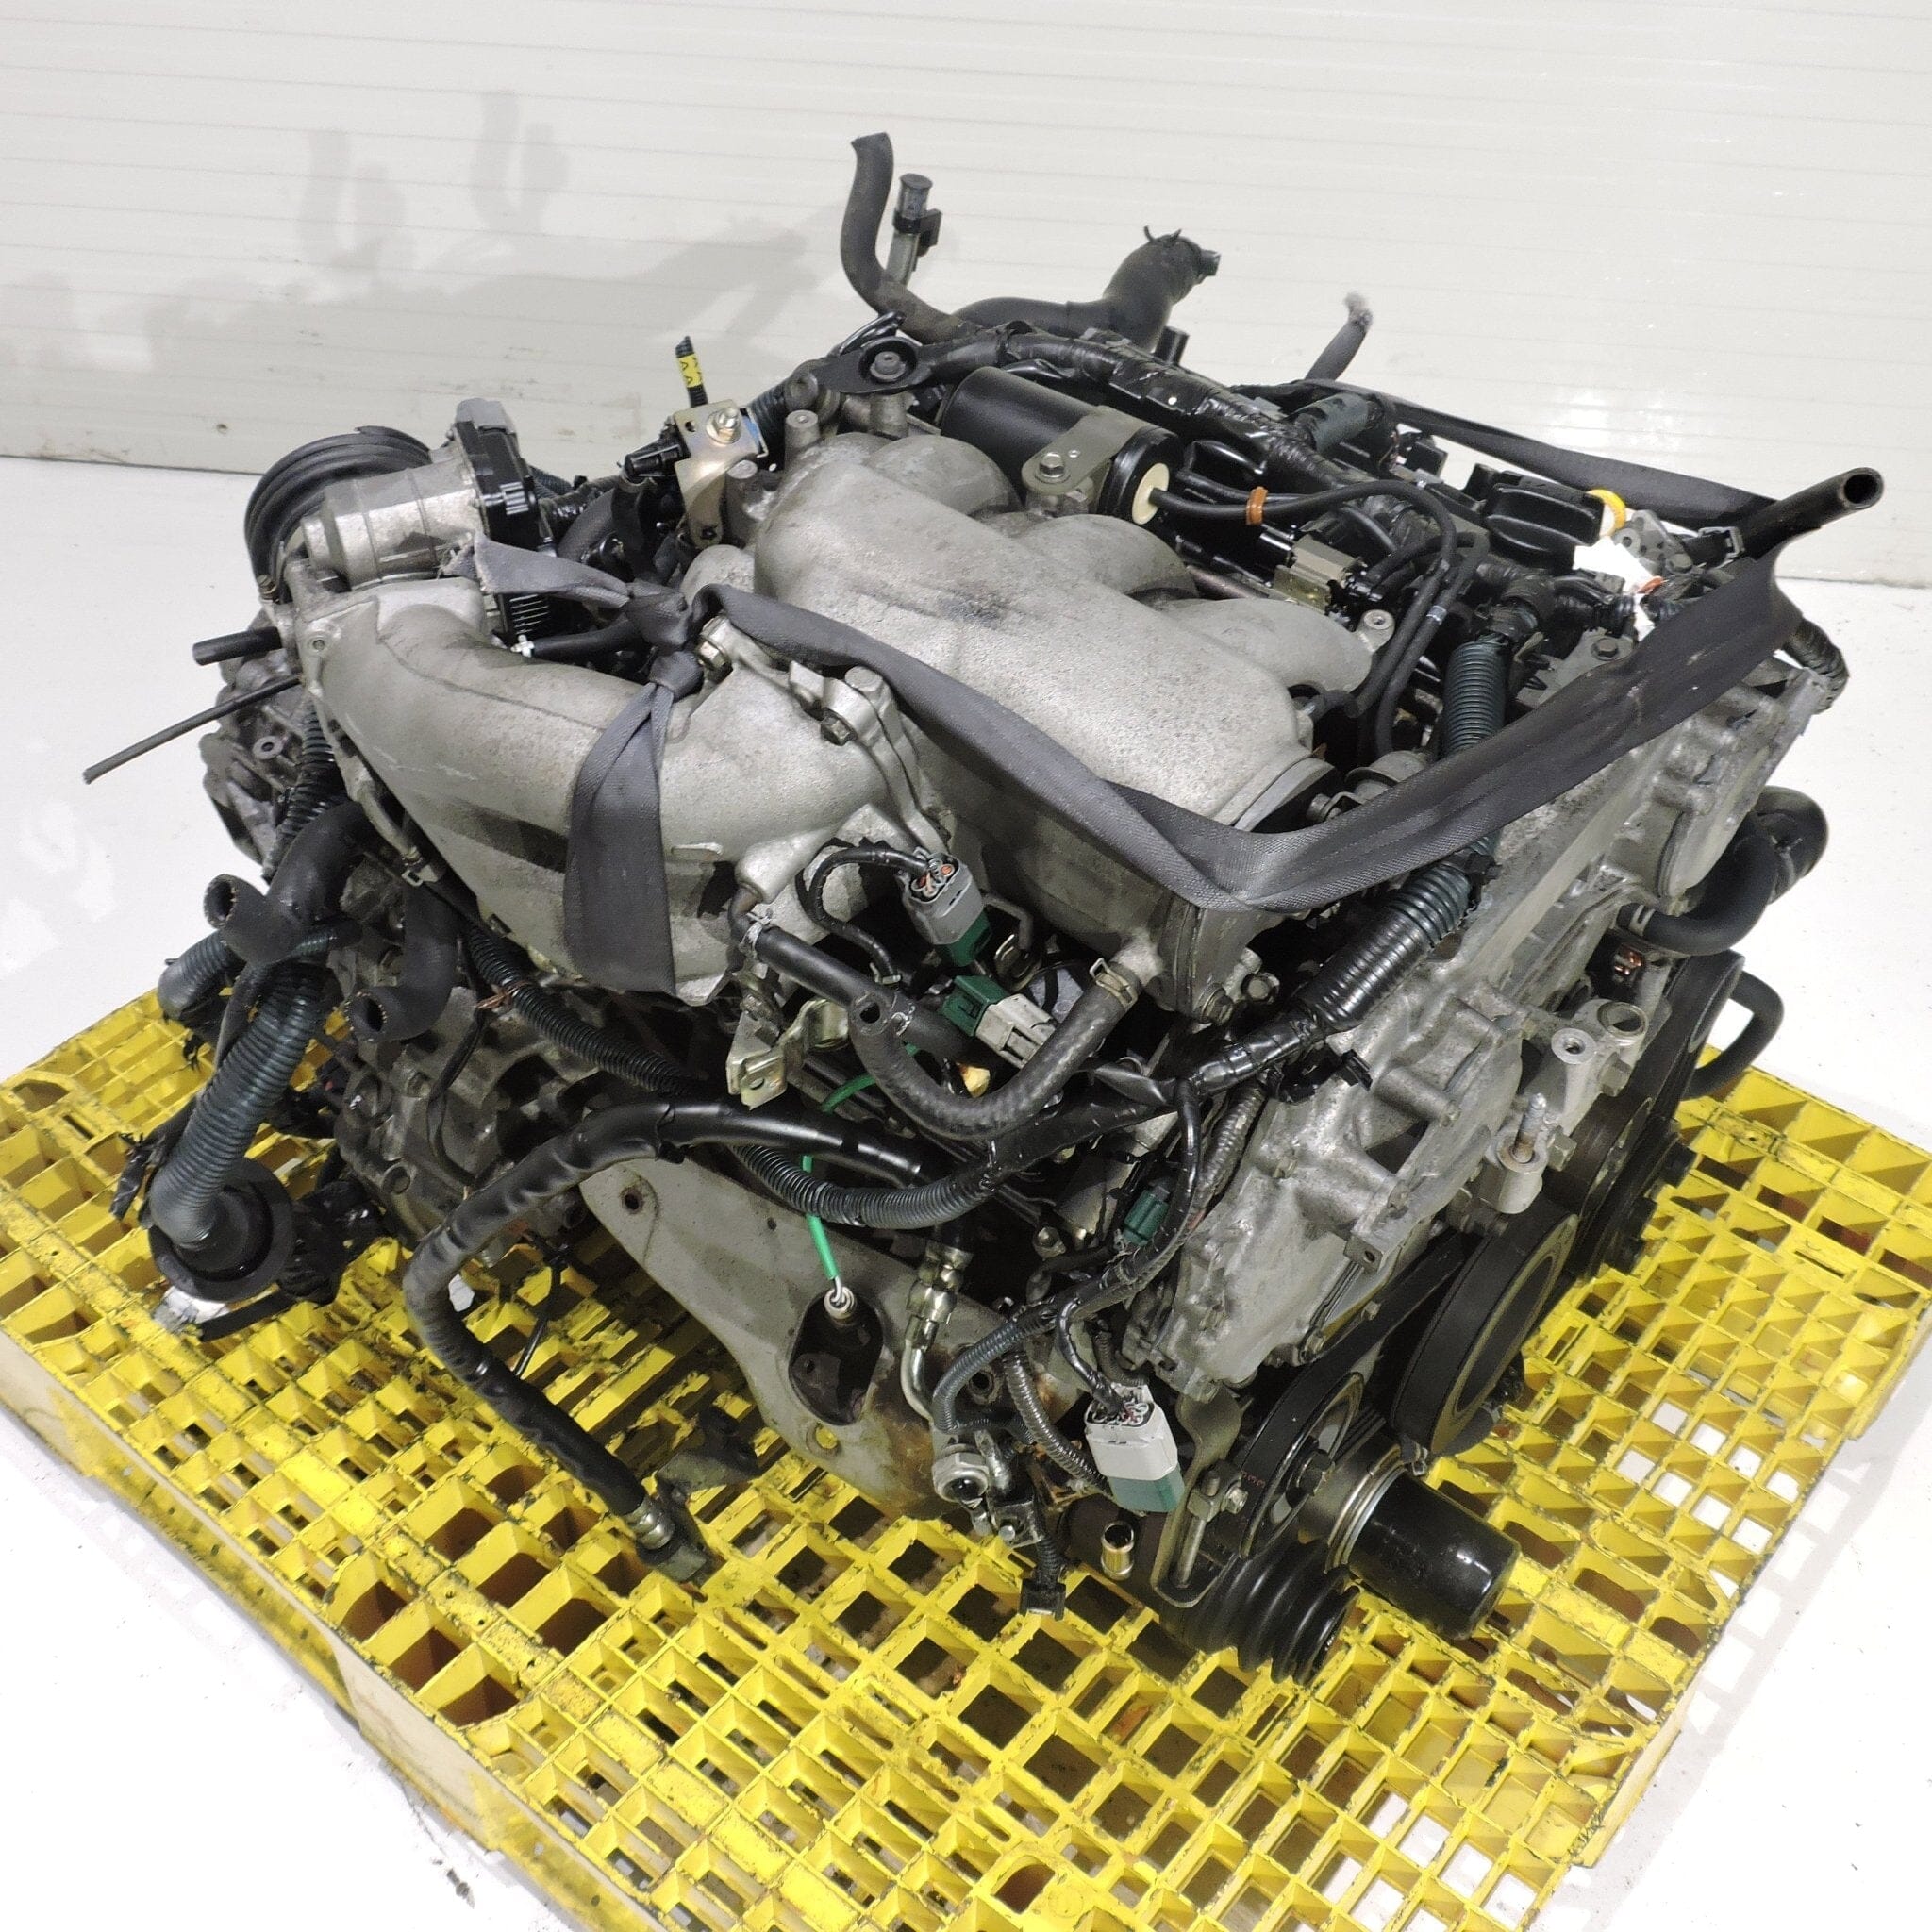 Nissan Maxima 2003-2004 3.5l V6 Jdm Engine - VQ35DE